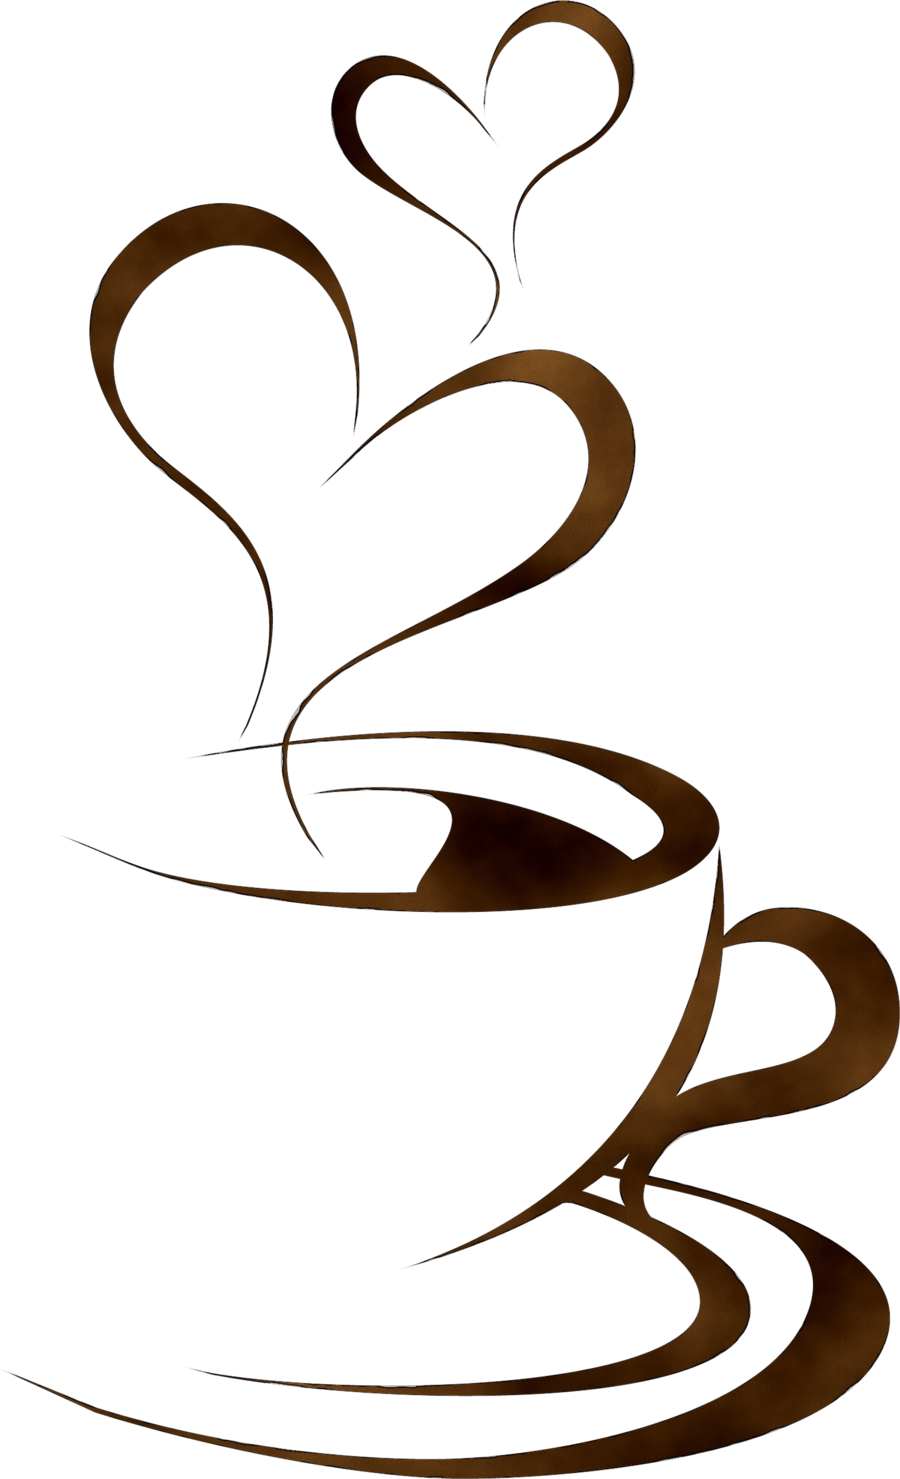 https://www.kindpng.com/picc/b/56-564218_transparent-coffee-cup-clipart-.png